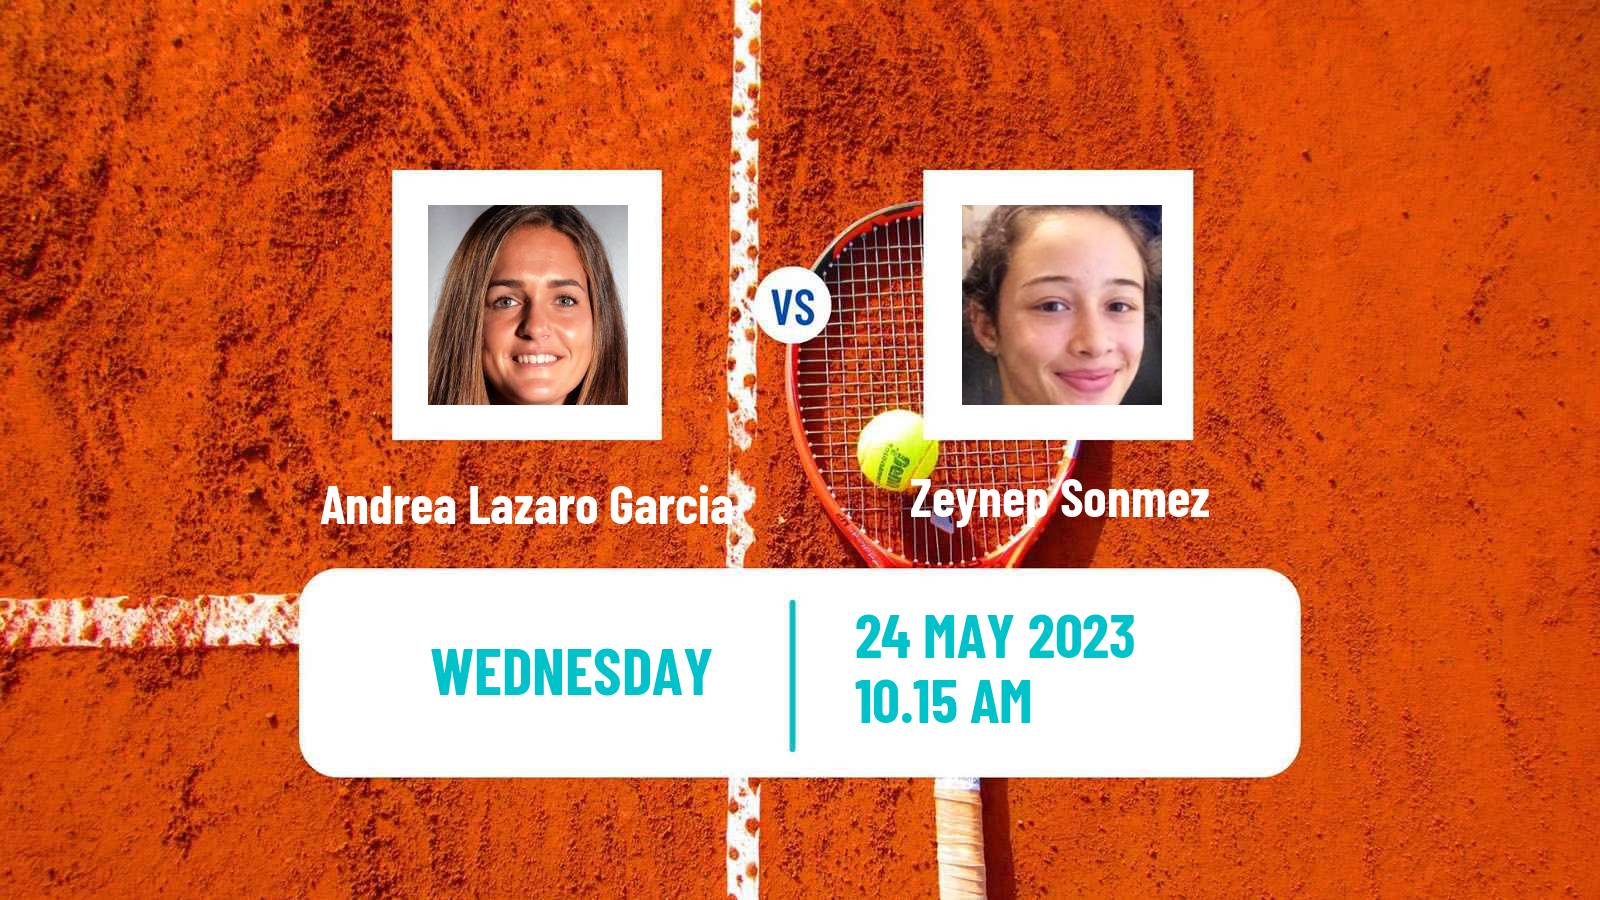 Tennis ITF W60 Grado Women Andrea Lazaro Garcia - Zeynep Sonmez